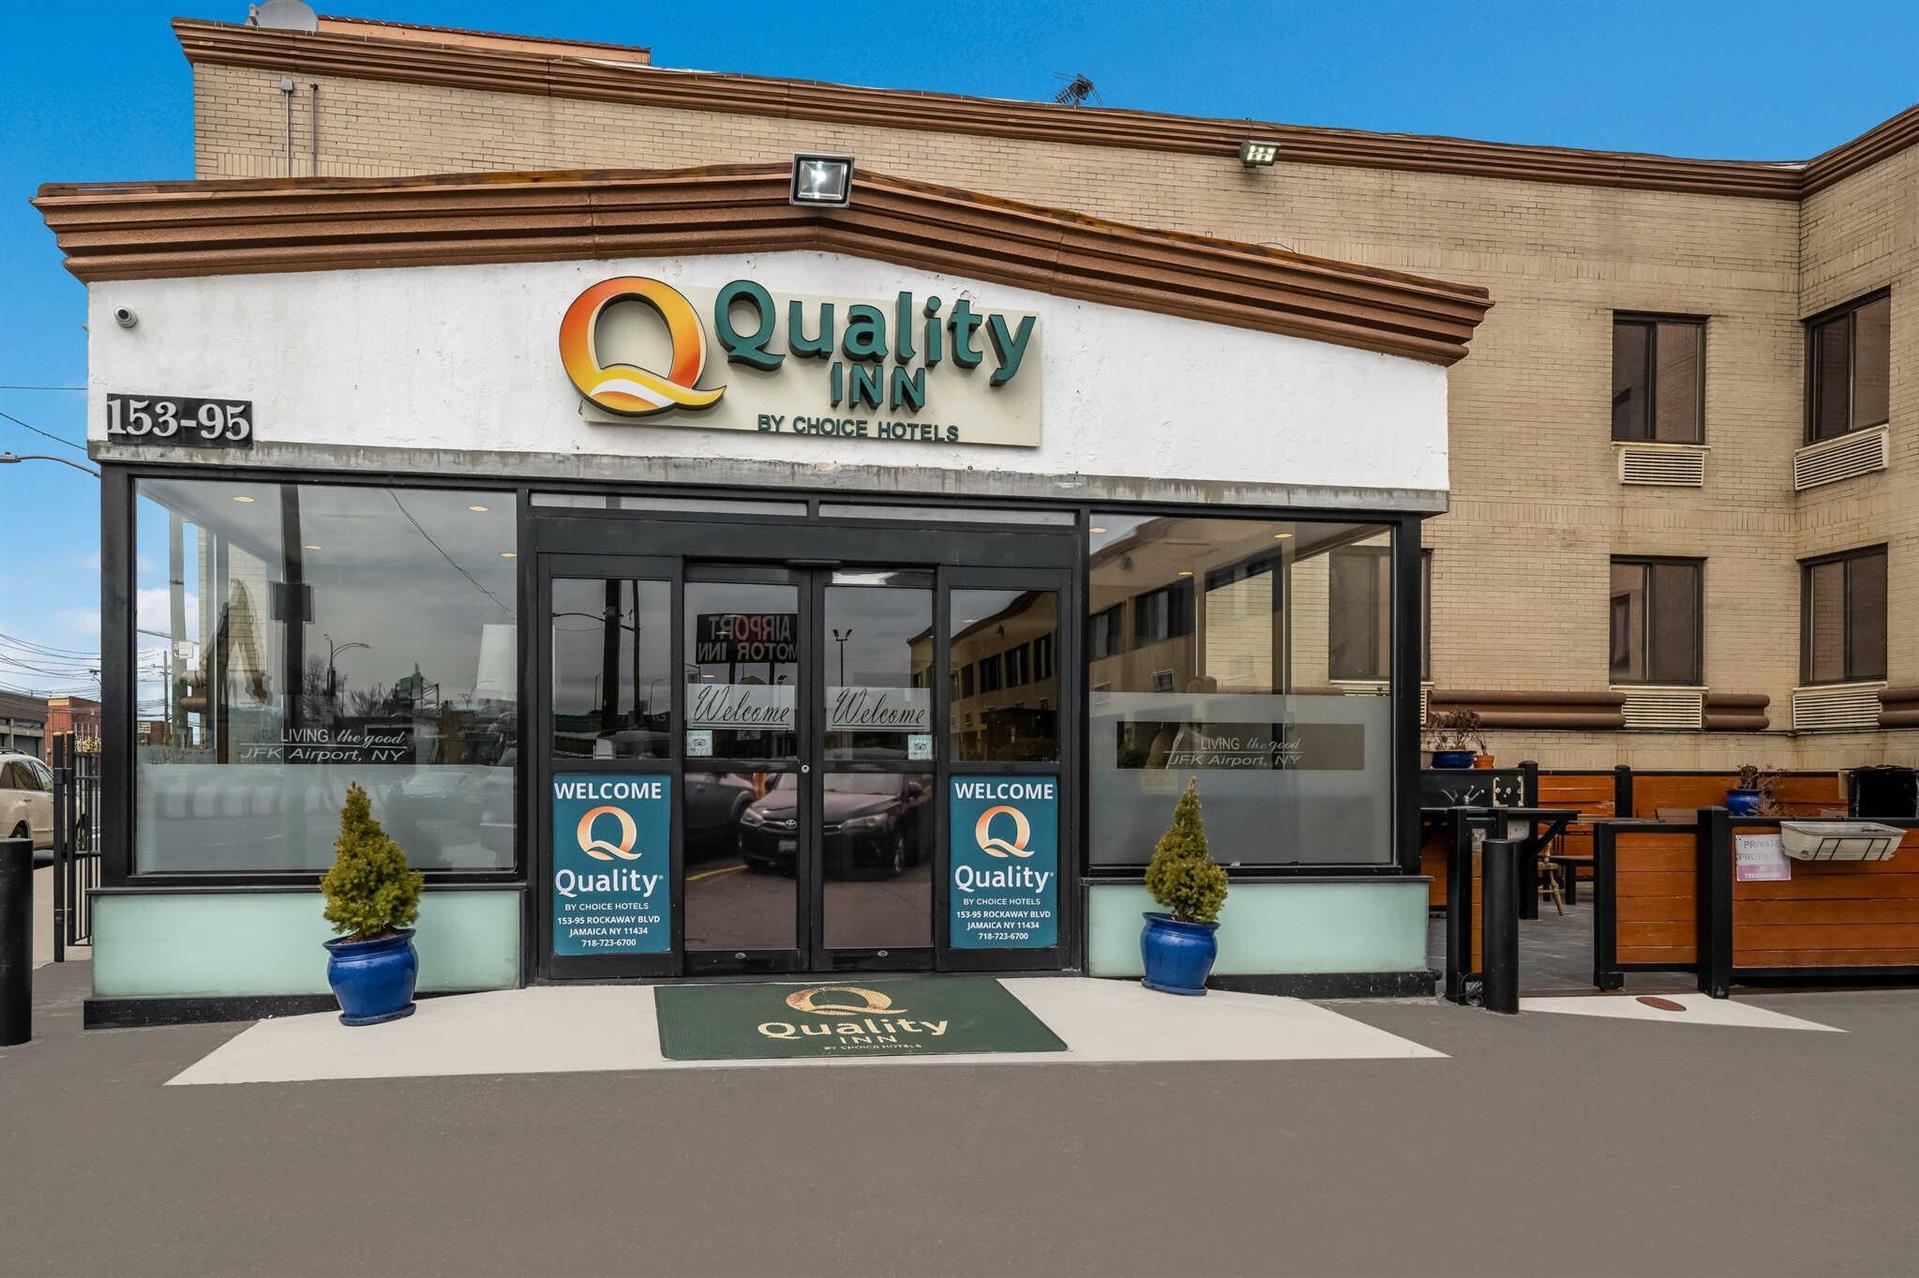 Quality Inn - Jamaica in New York, NY